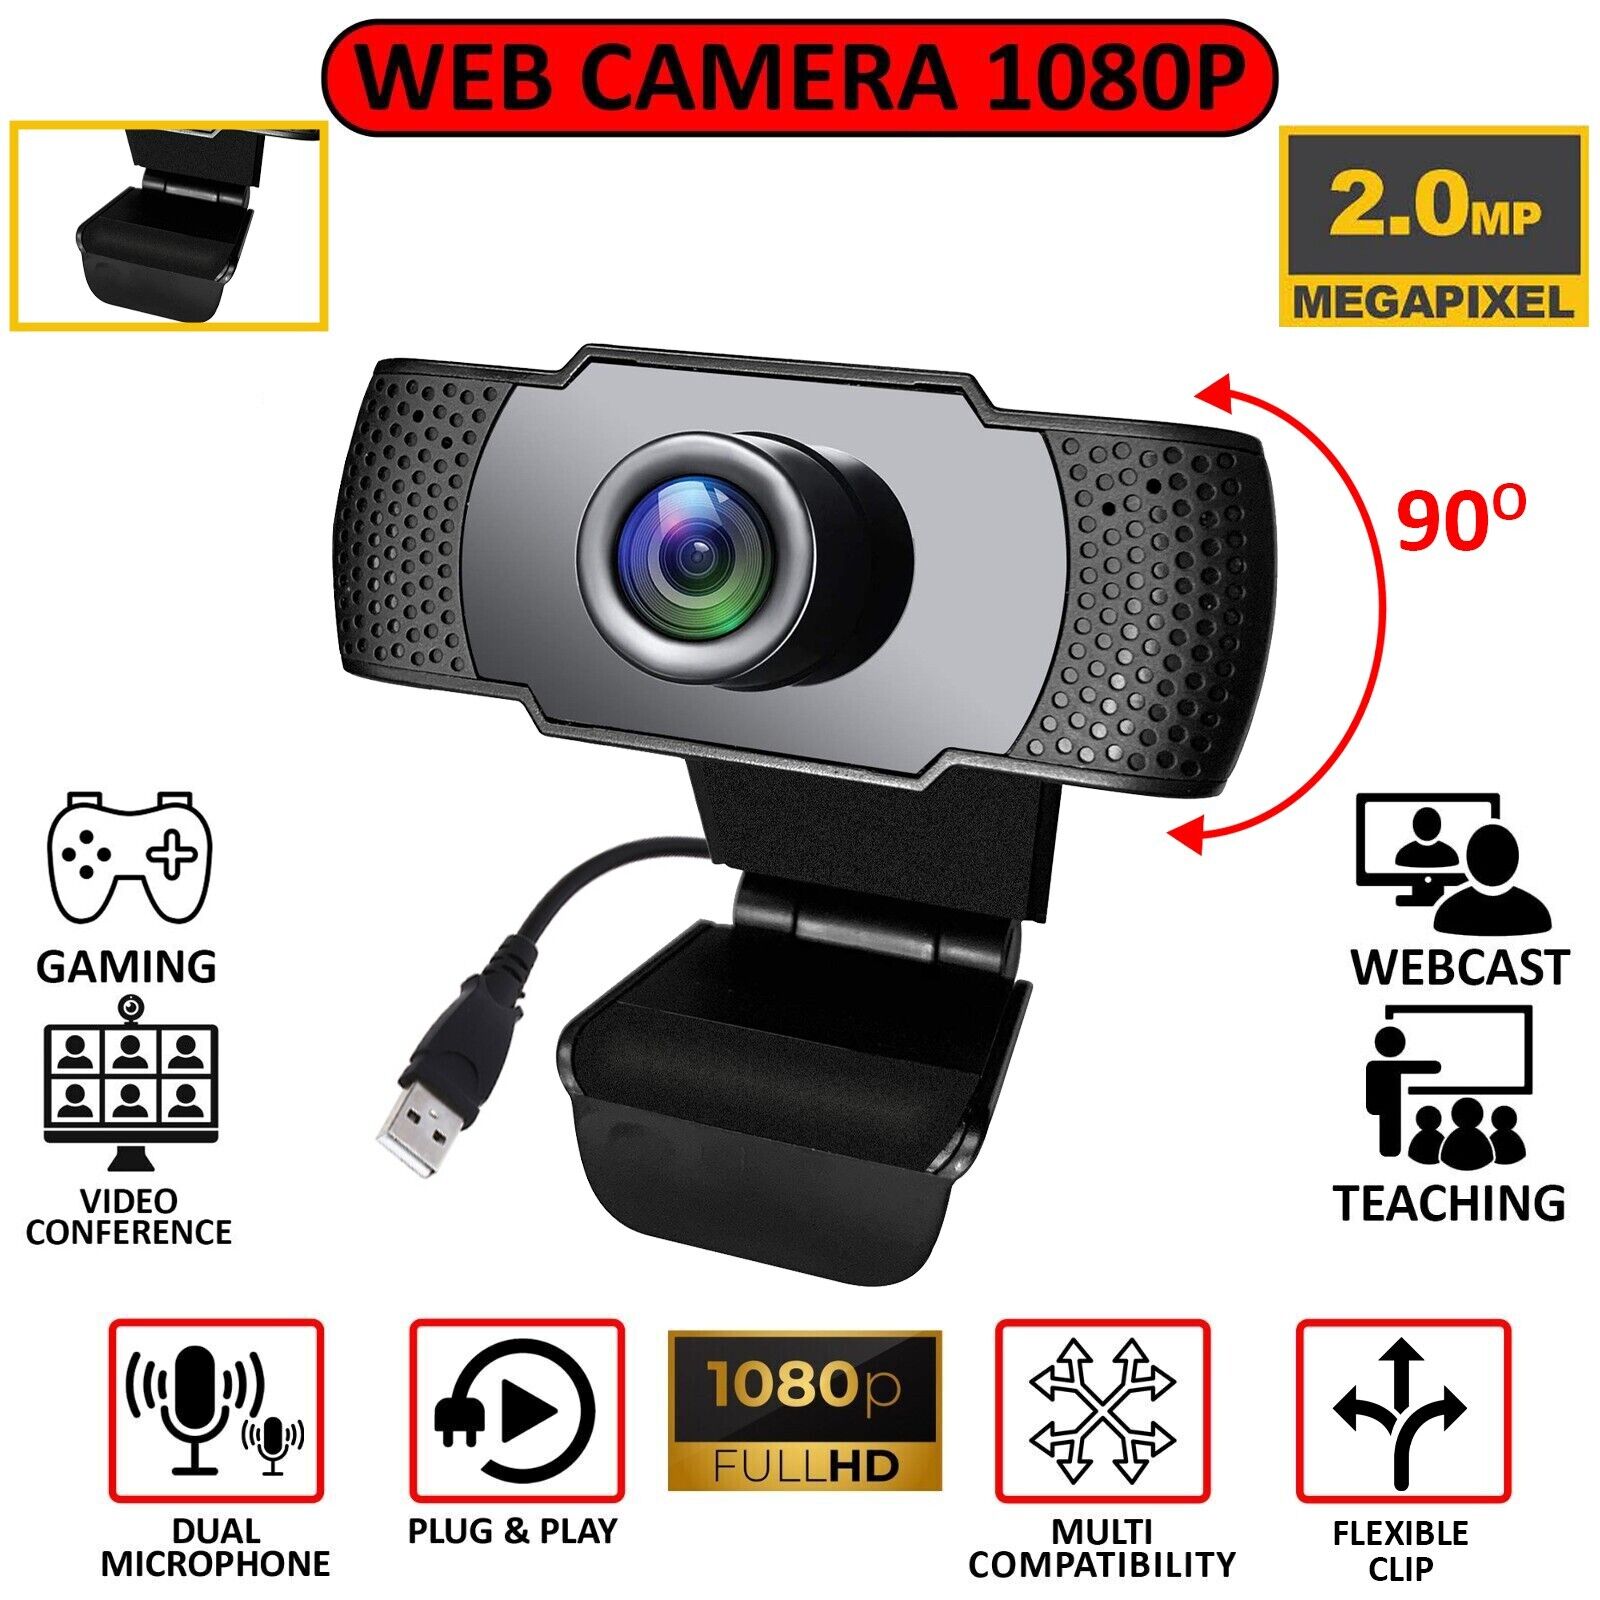 Webcam Full HD 1080P for PC Desktop/Laptop Auto Focus Web Camera with Microphone